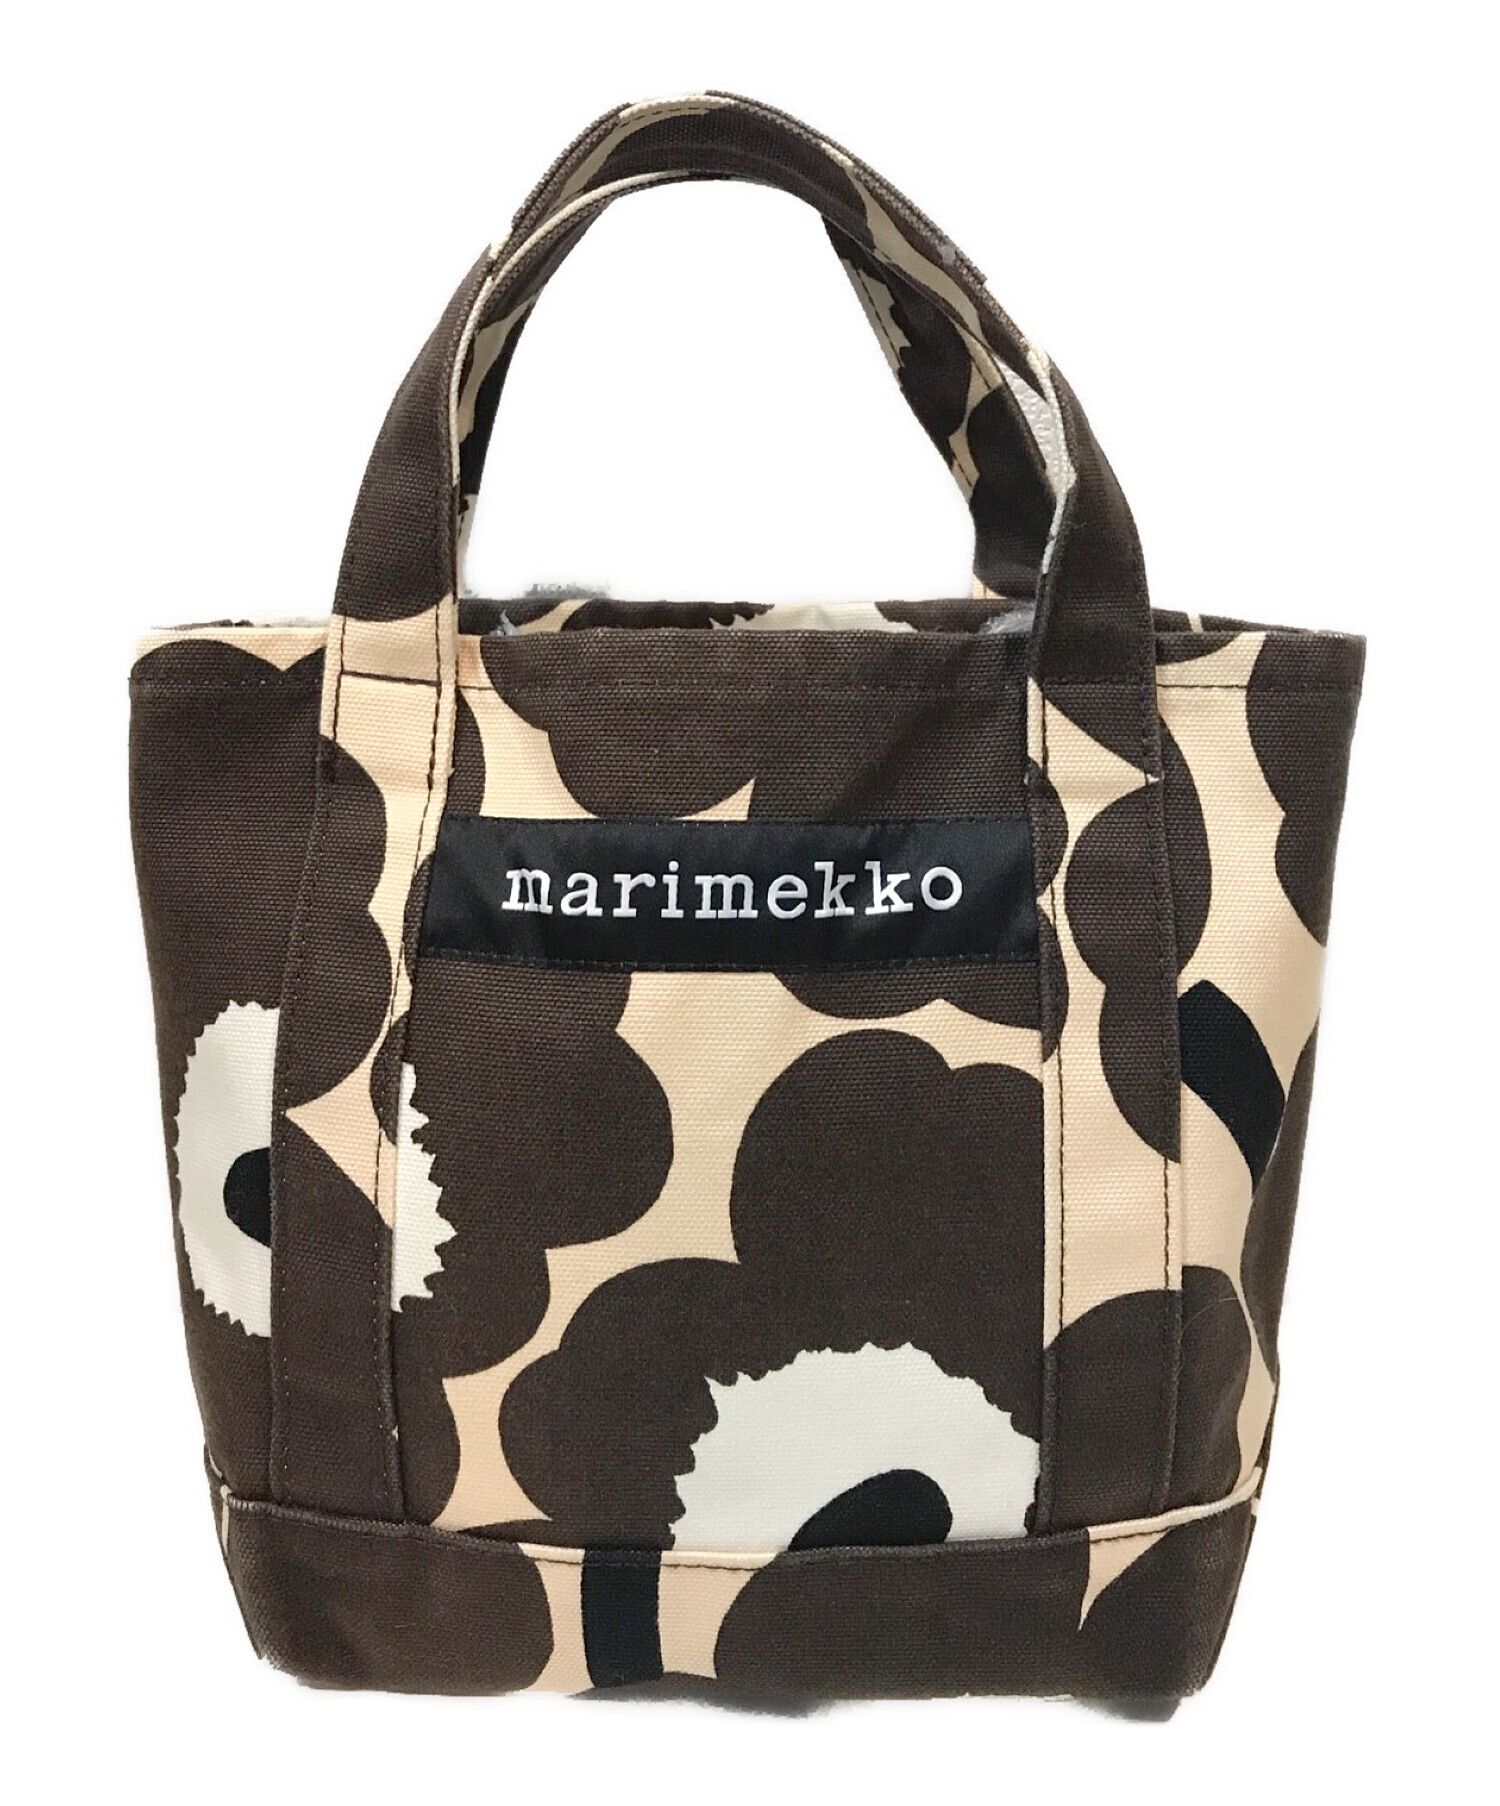 marimekko (マリメッコ) ウニッコ コットンキャンバス トートバッグ ブラウン